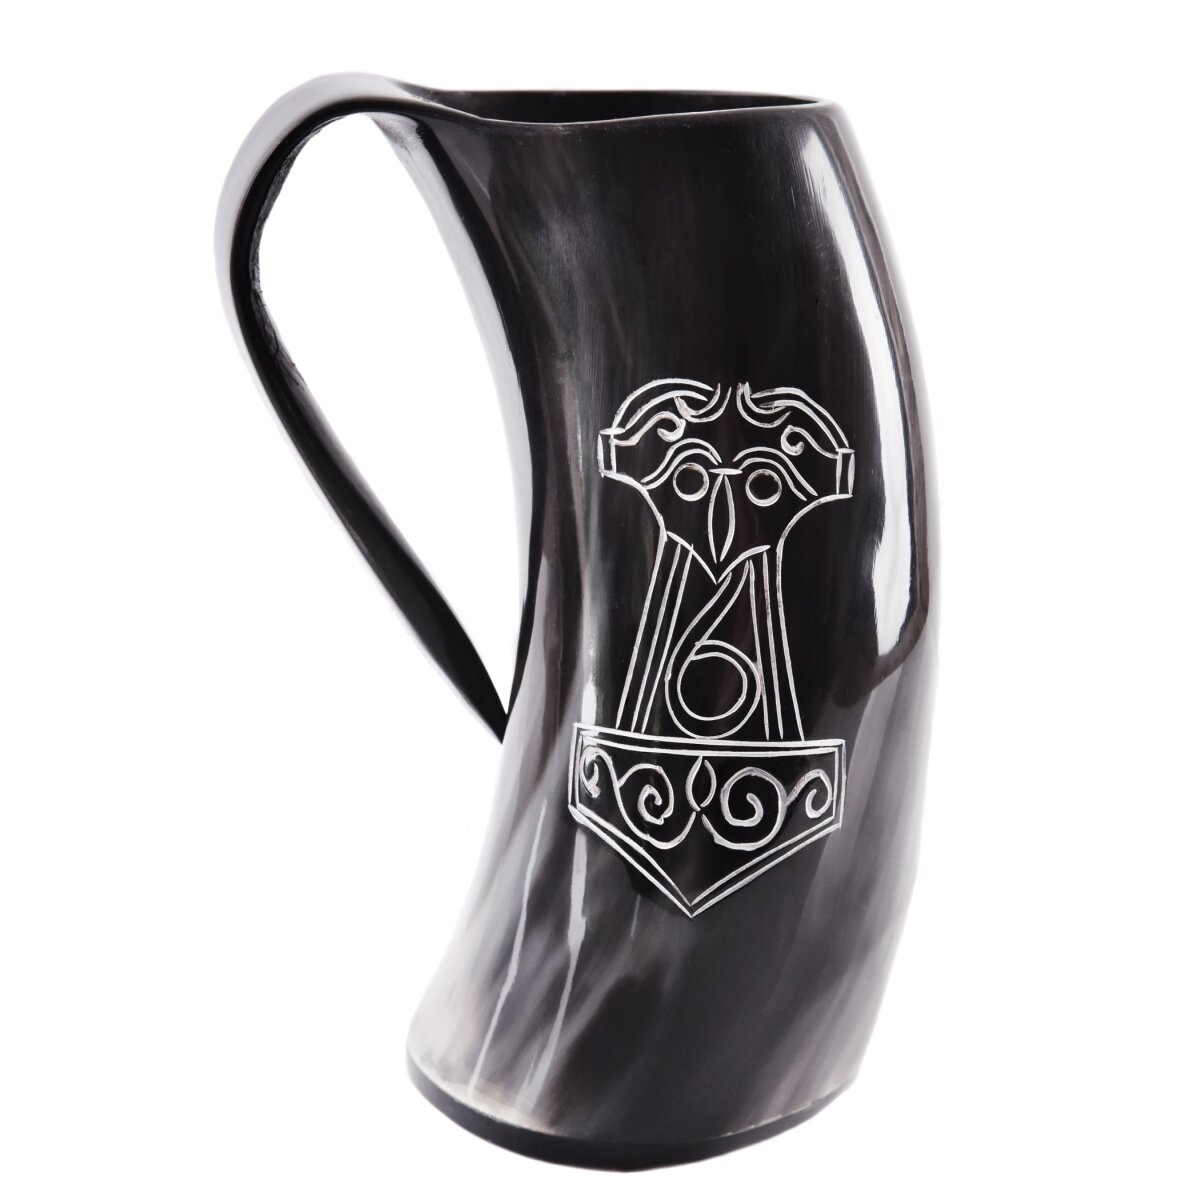 Beer mug made of horn - "Mjölnir,...